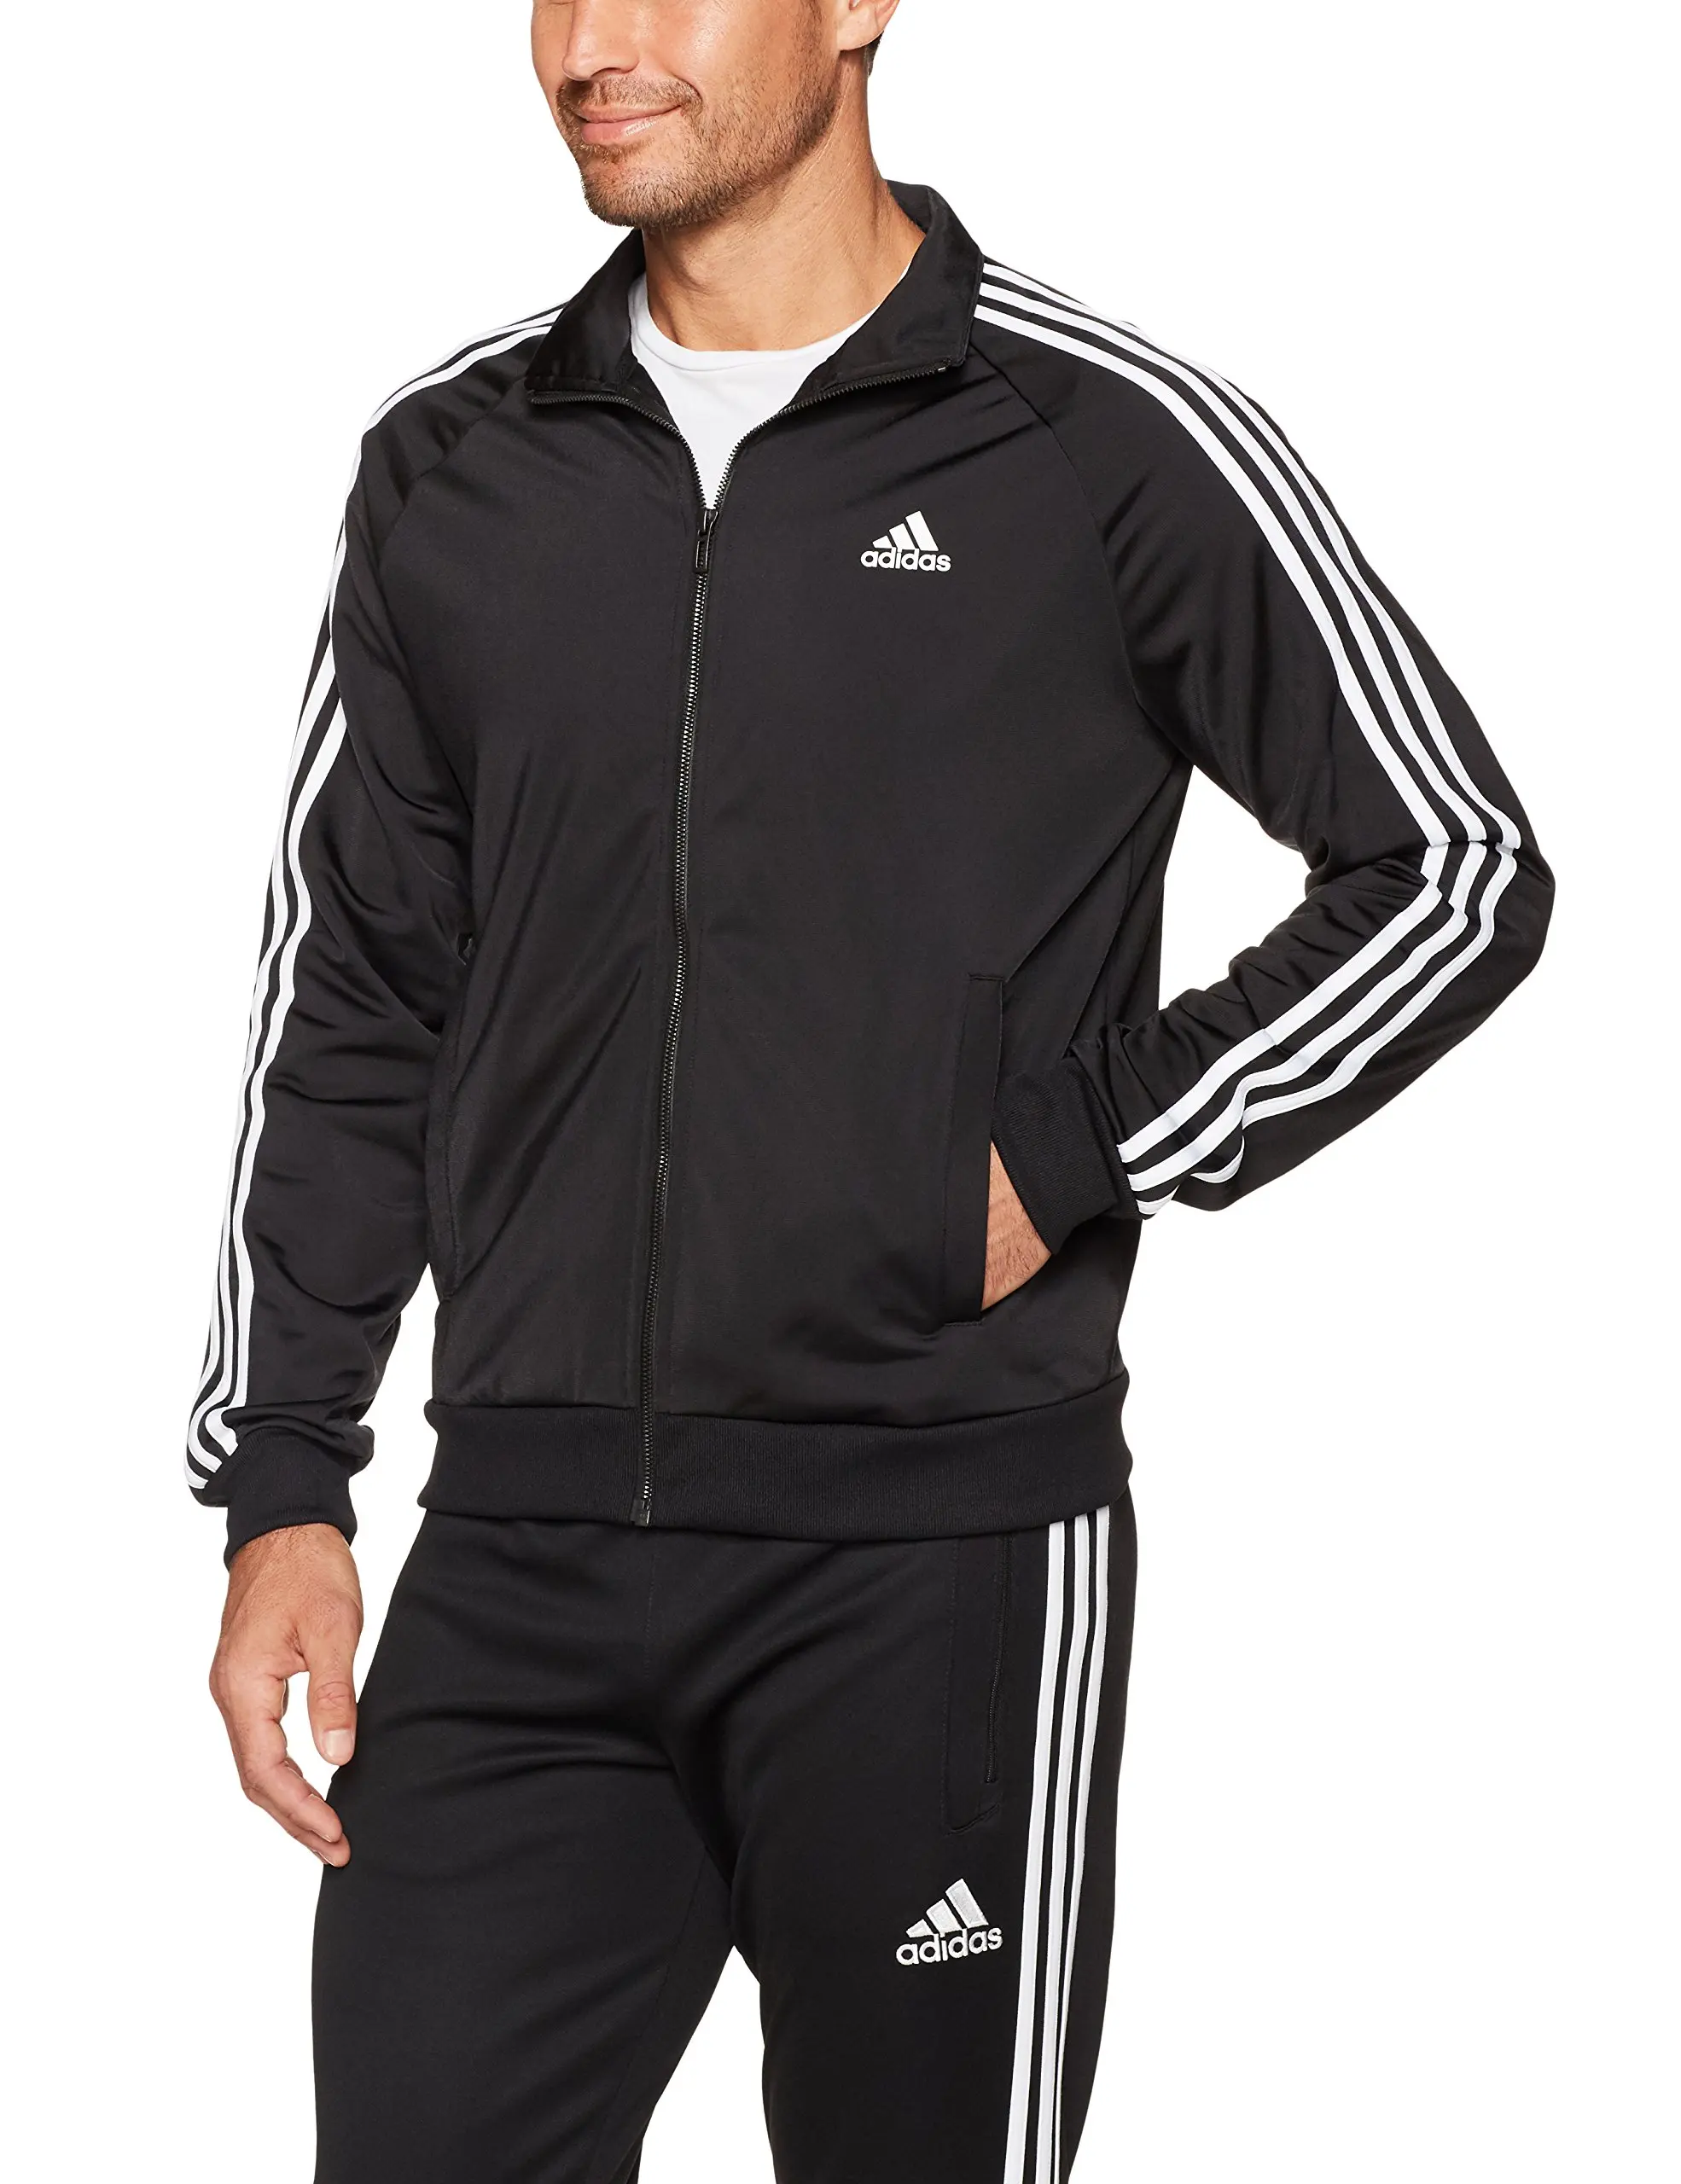 adidas men's essentials track jacket